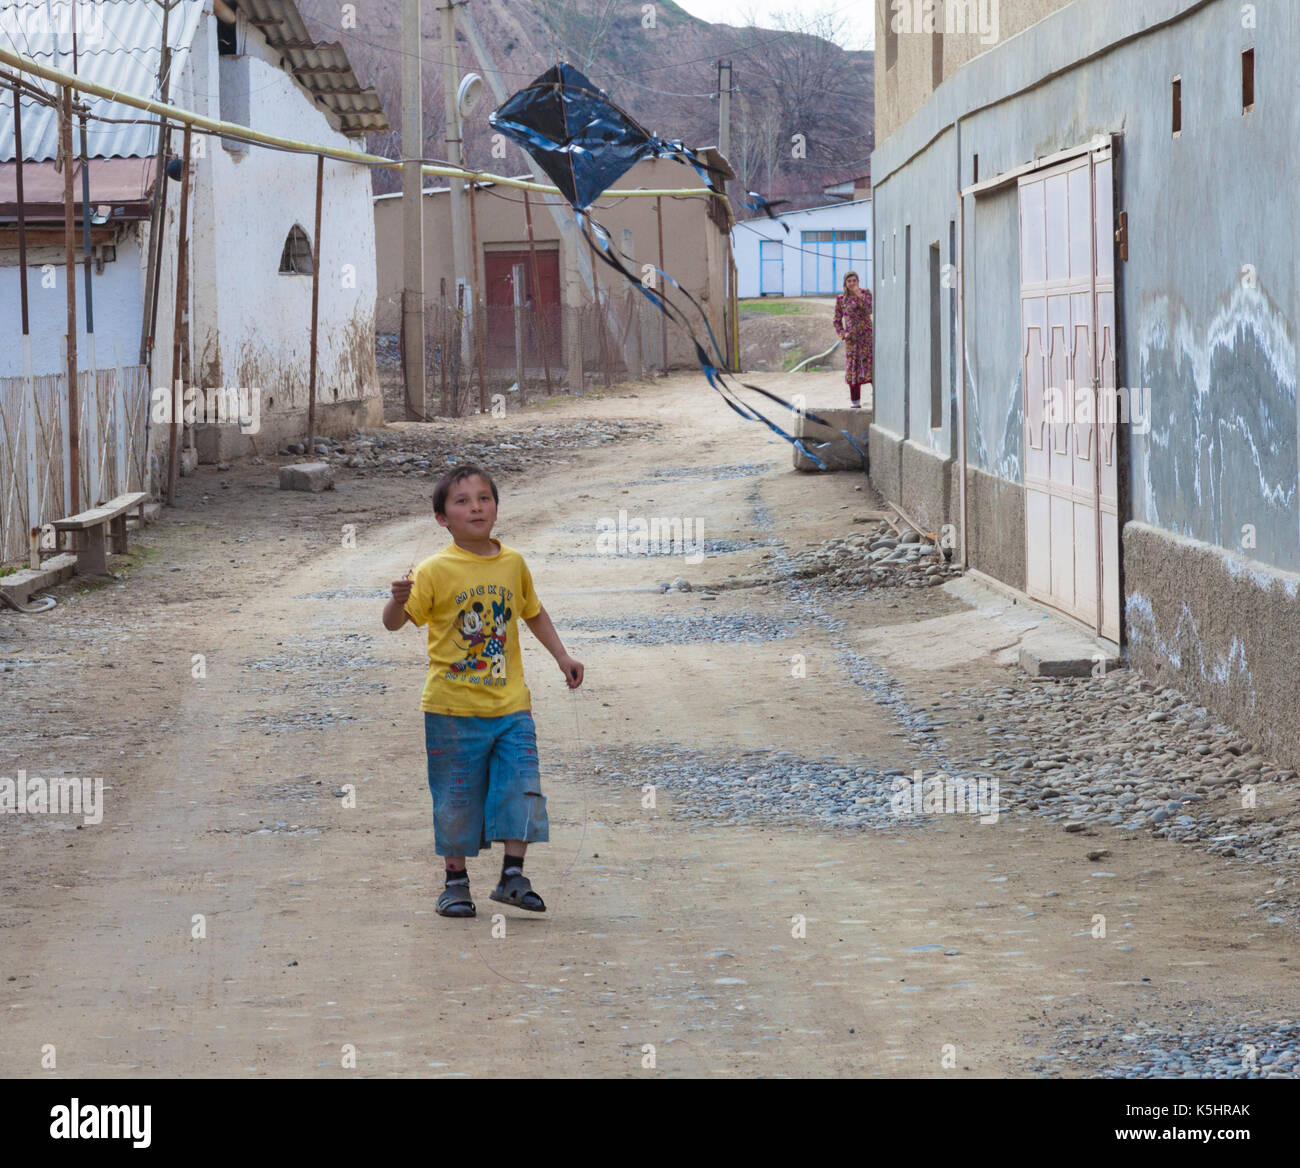 The uzbek boy at the street playing kite Stock Photo